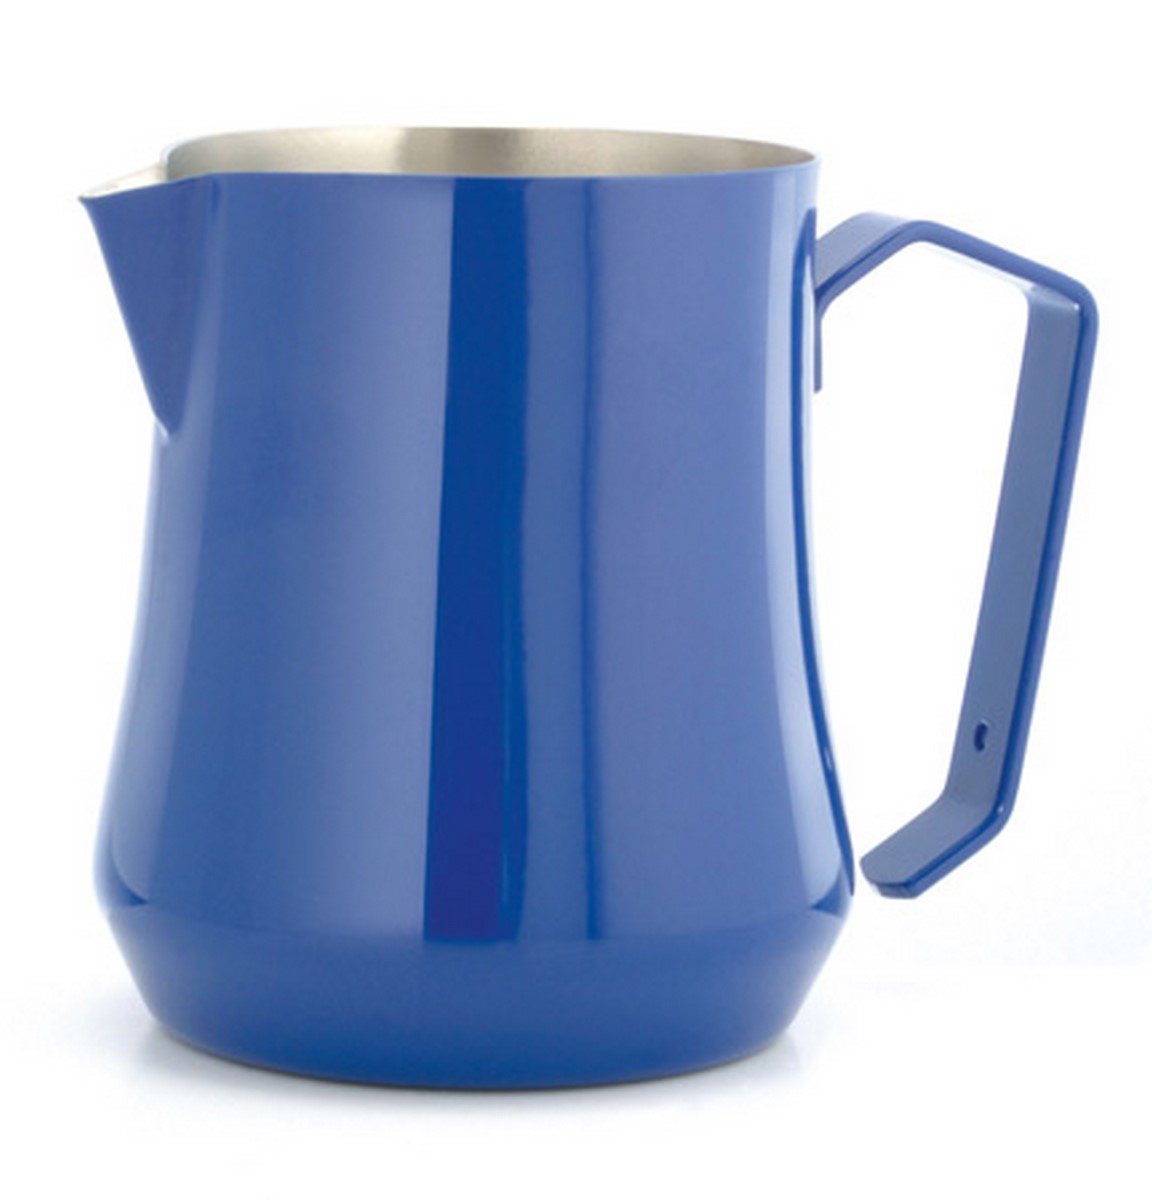 Acquista online Milk pitcher 50 cl. Motta mod Tulip blue